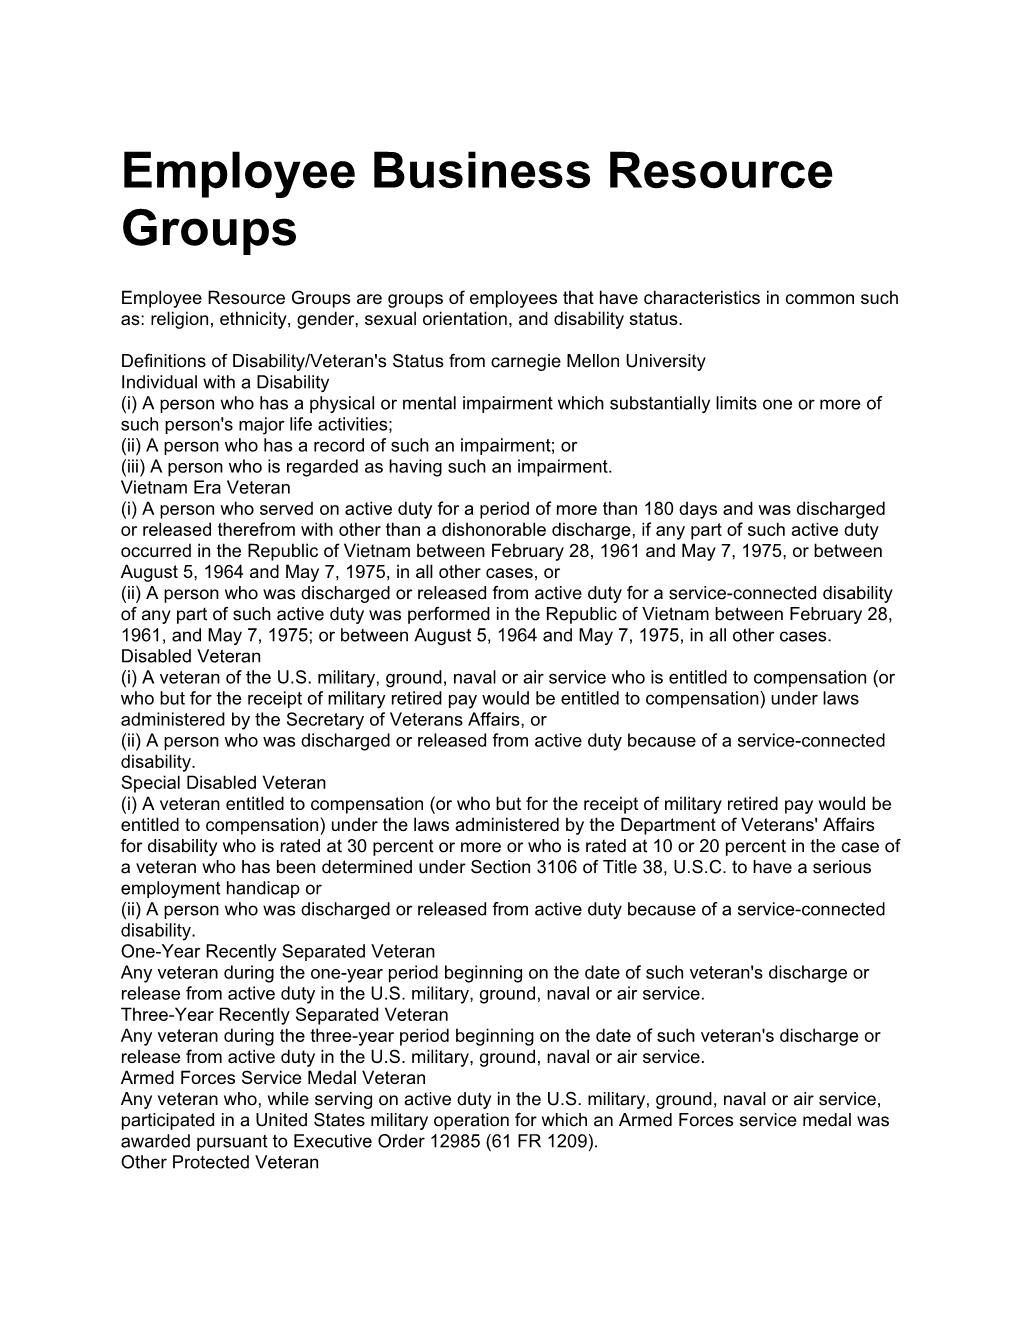 Employee Business Resource Groups